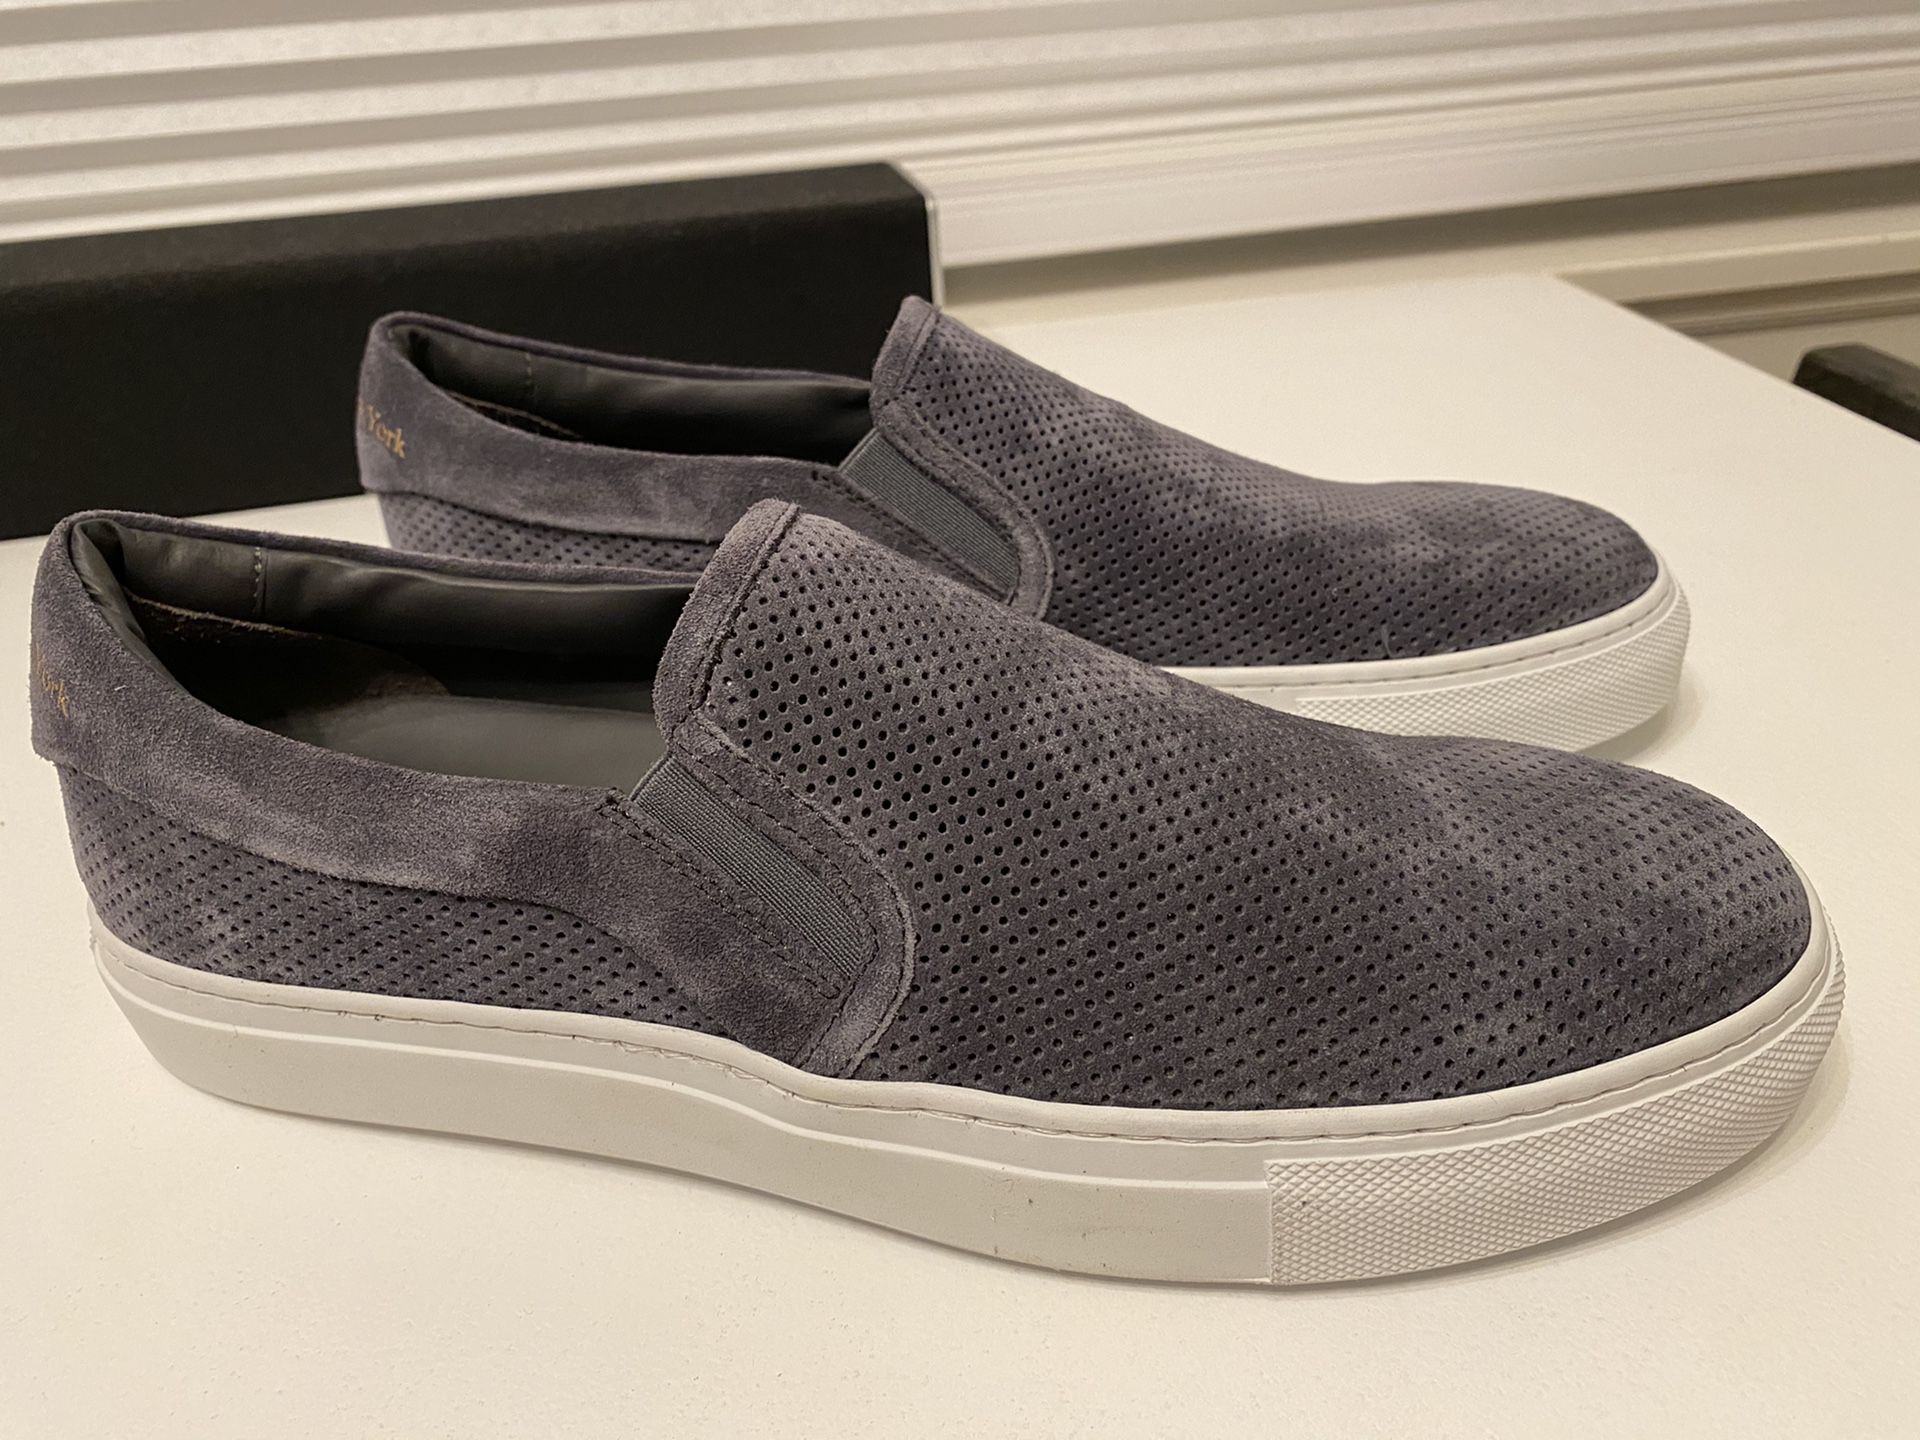 To Boot New York Buelton Slip On Sneakers Vans Size 8.5